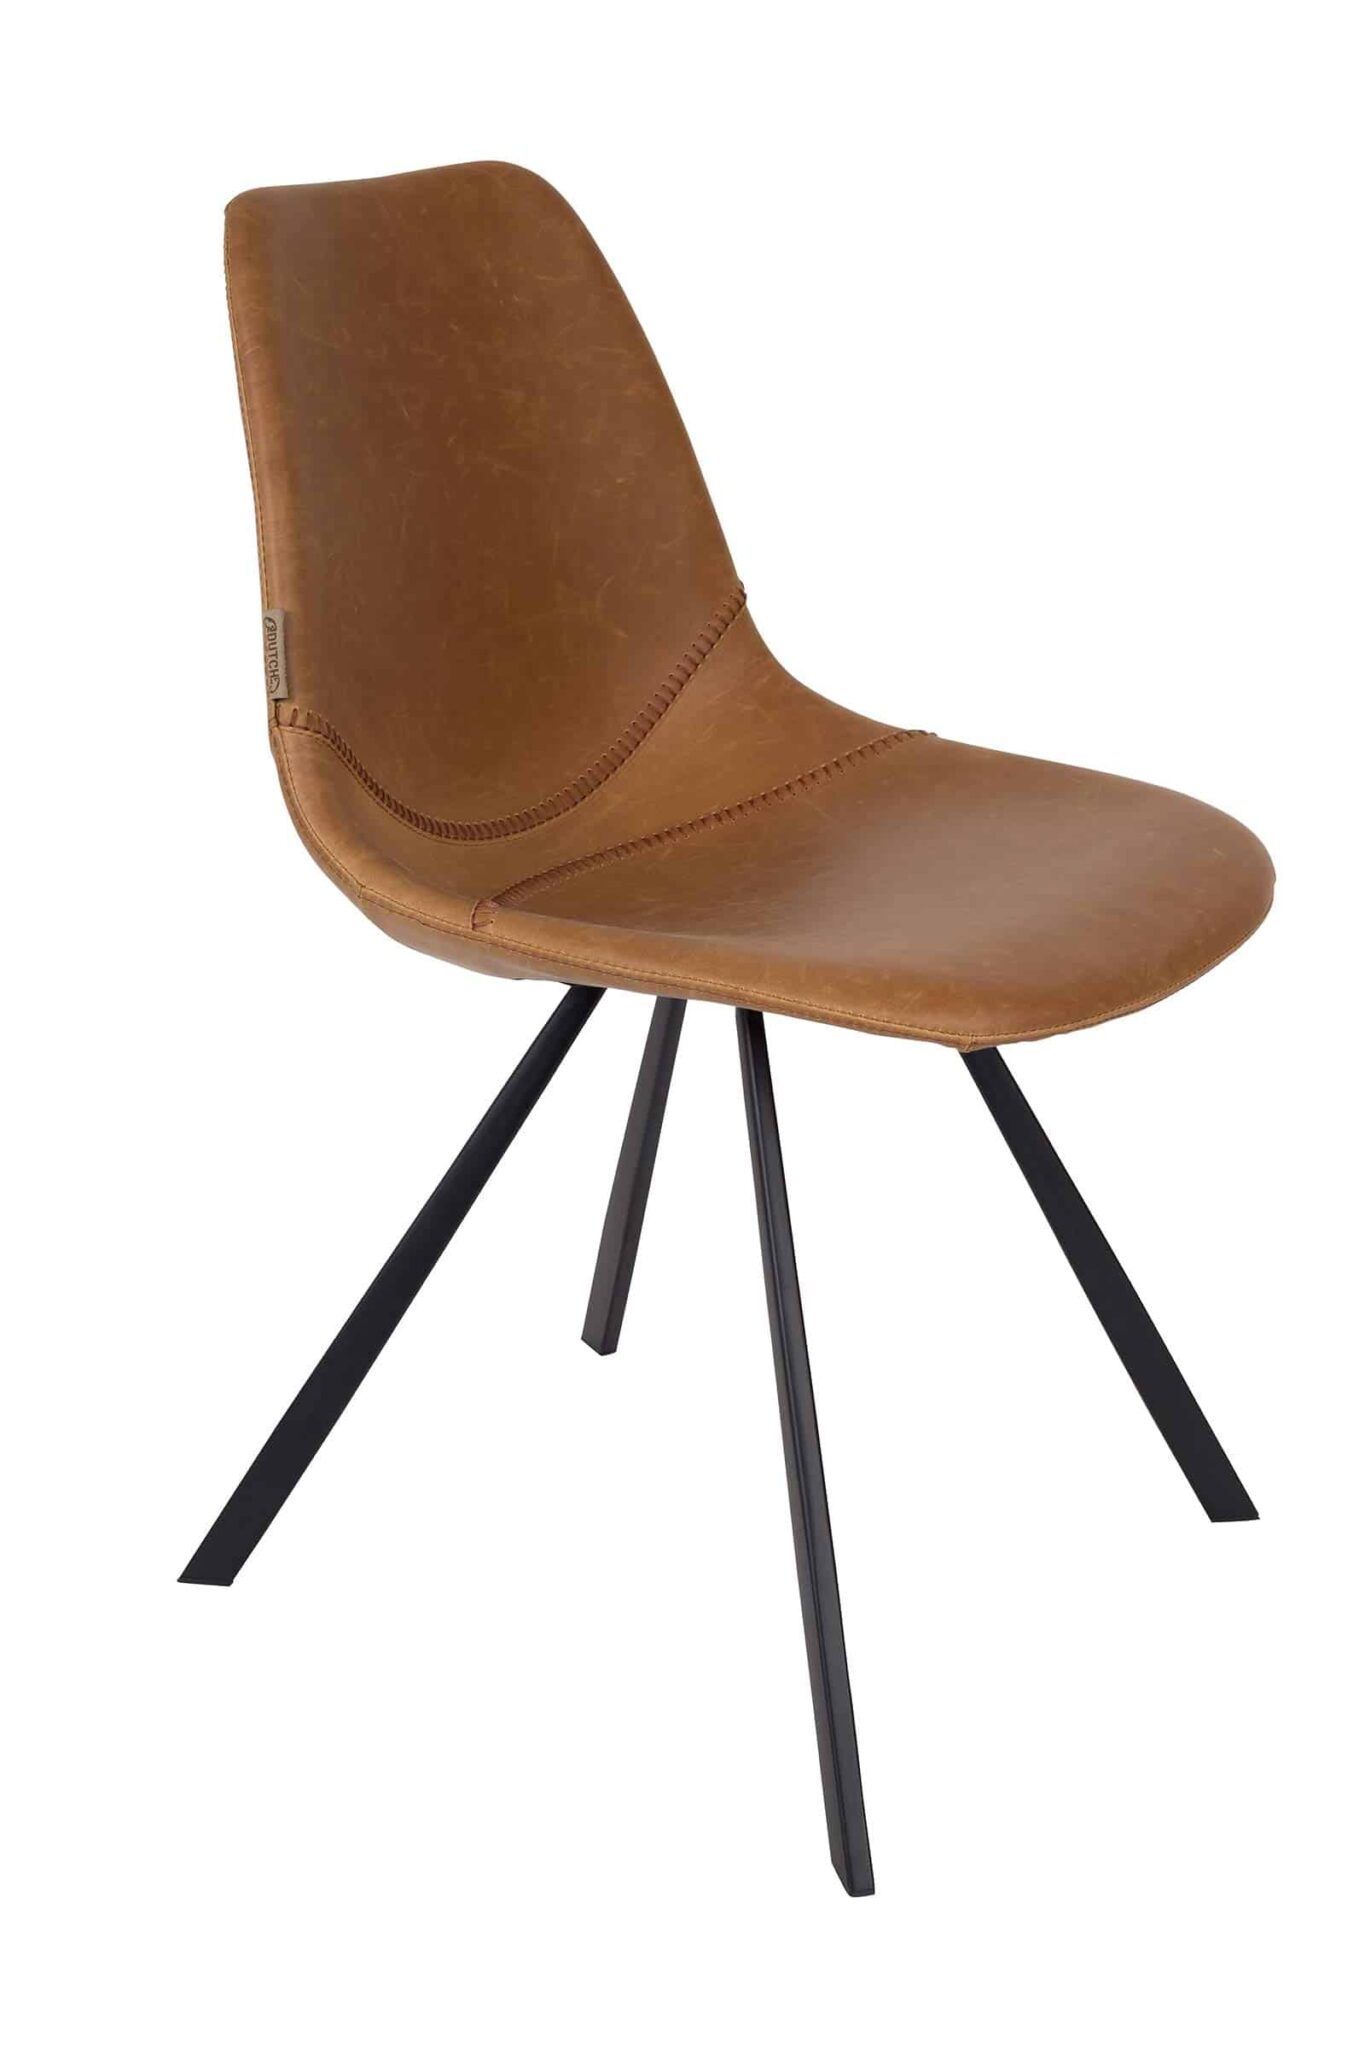 Larry Belmont zaad Kamer 2 x Franky stoel Dutchbone - Designshopp